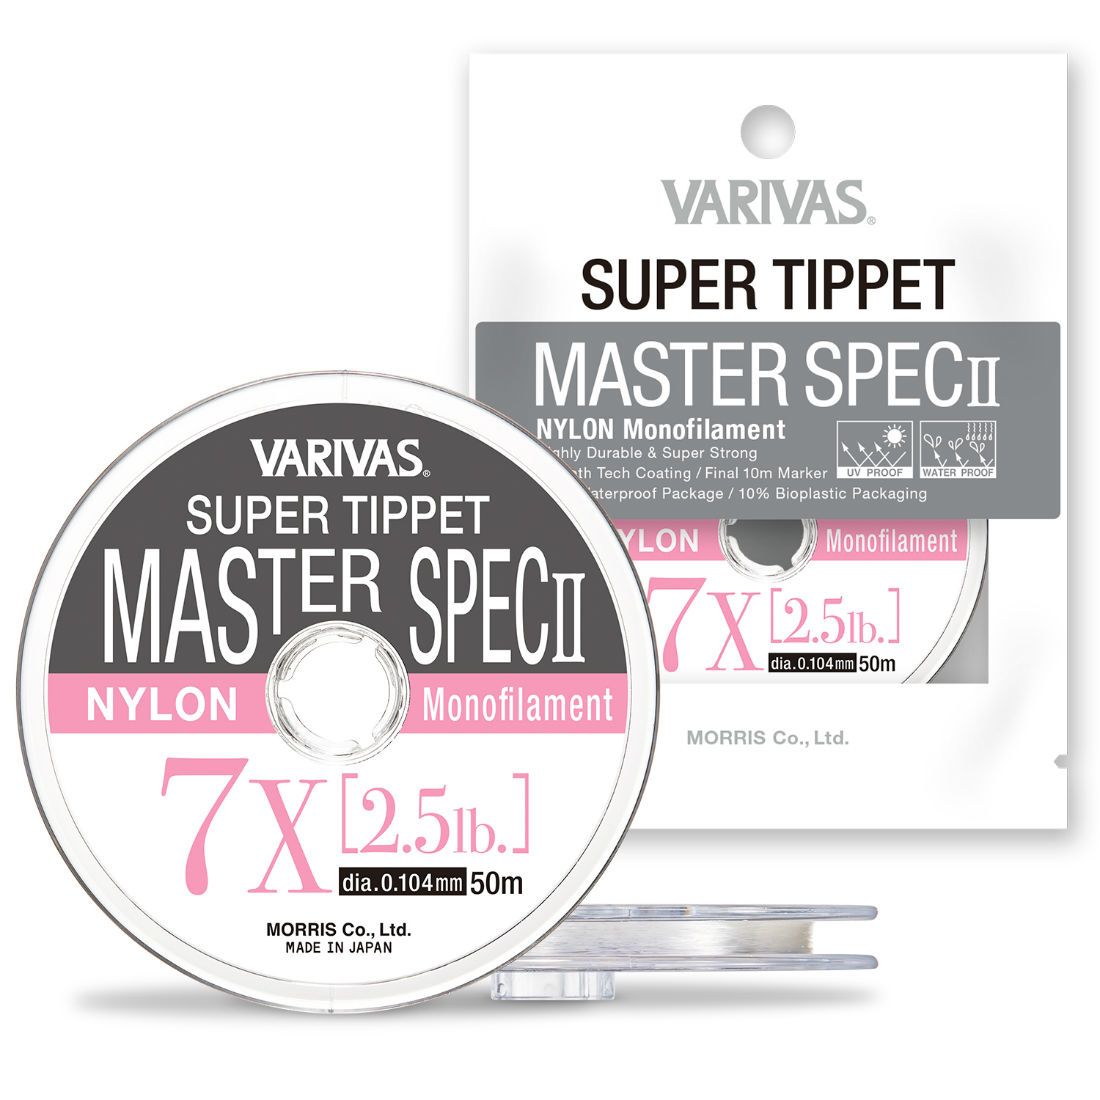 FIR VARIVAS SUPER TIPPET MASTER SPEC ll NYLON 7X 50m 0.104mm 2.5lb